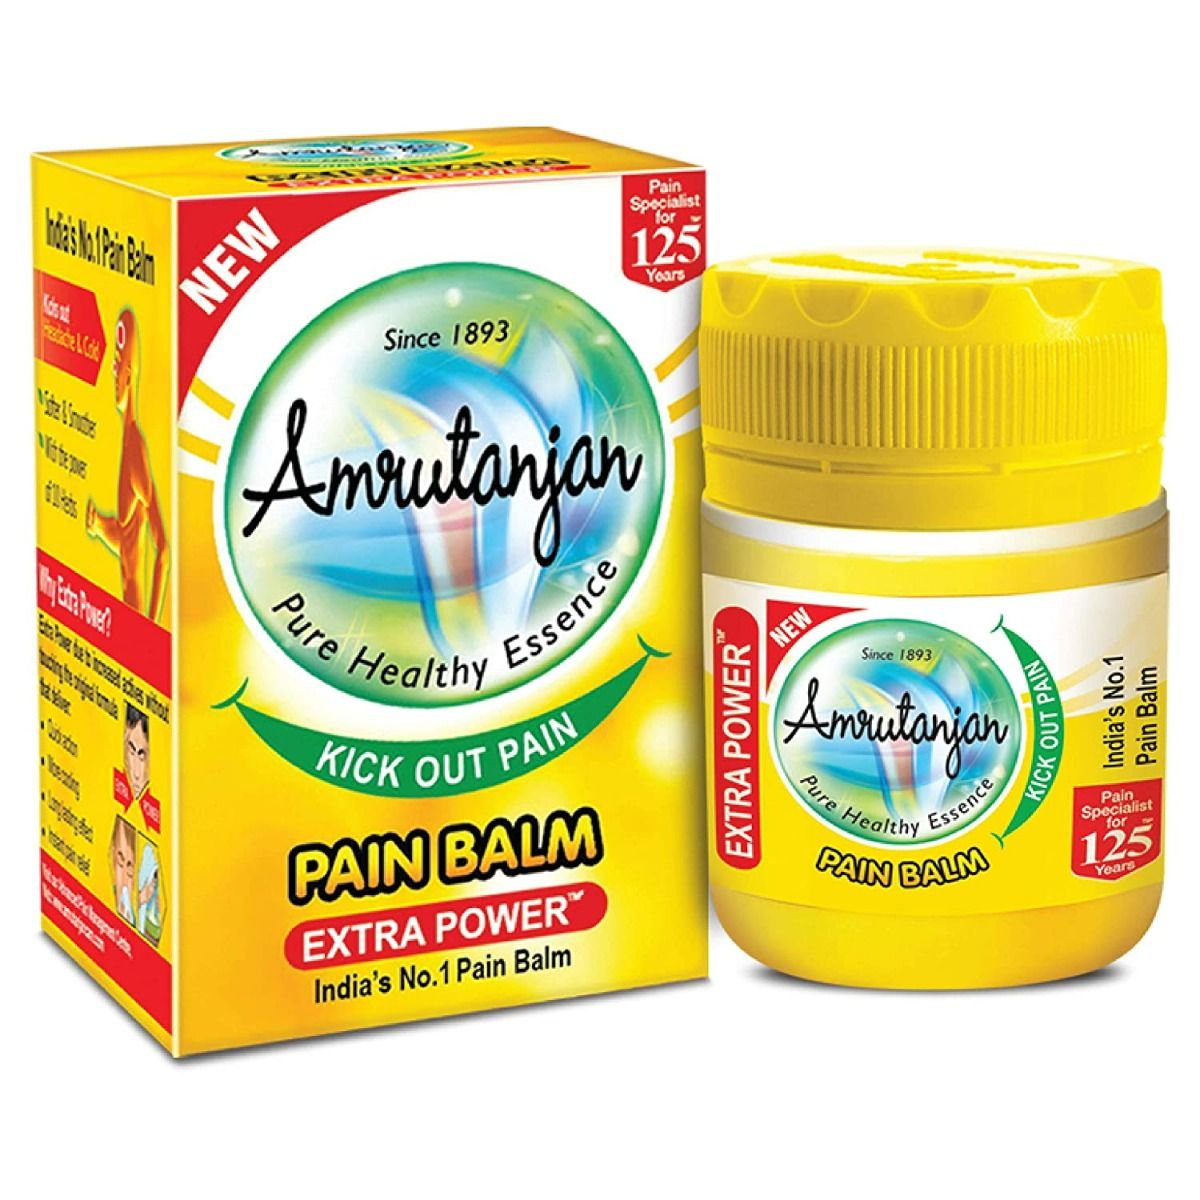 Amrutanjan Extra Power Pain Balm, 8 gm, Pack of 1 